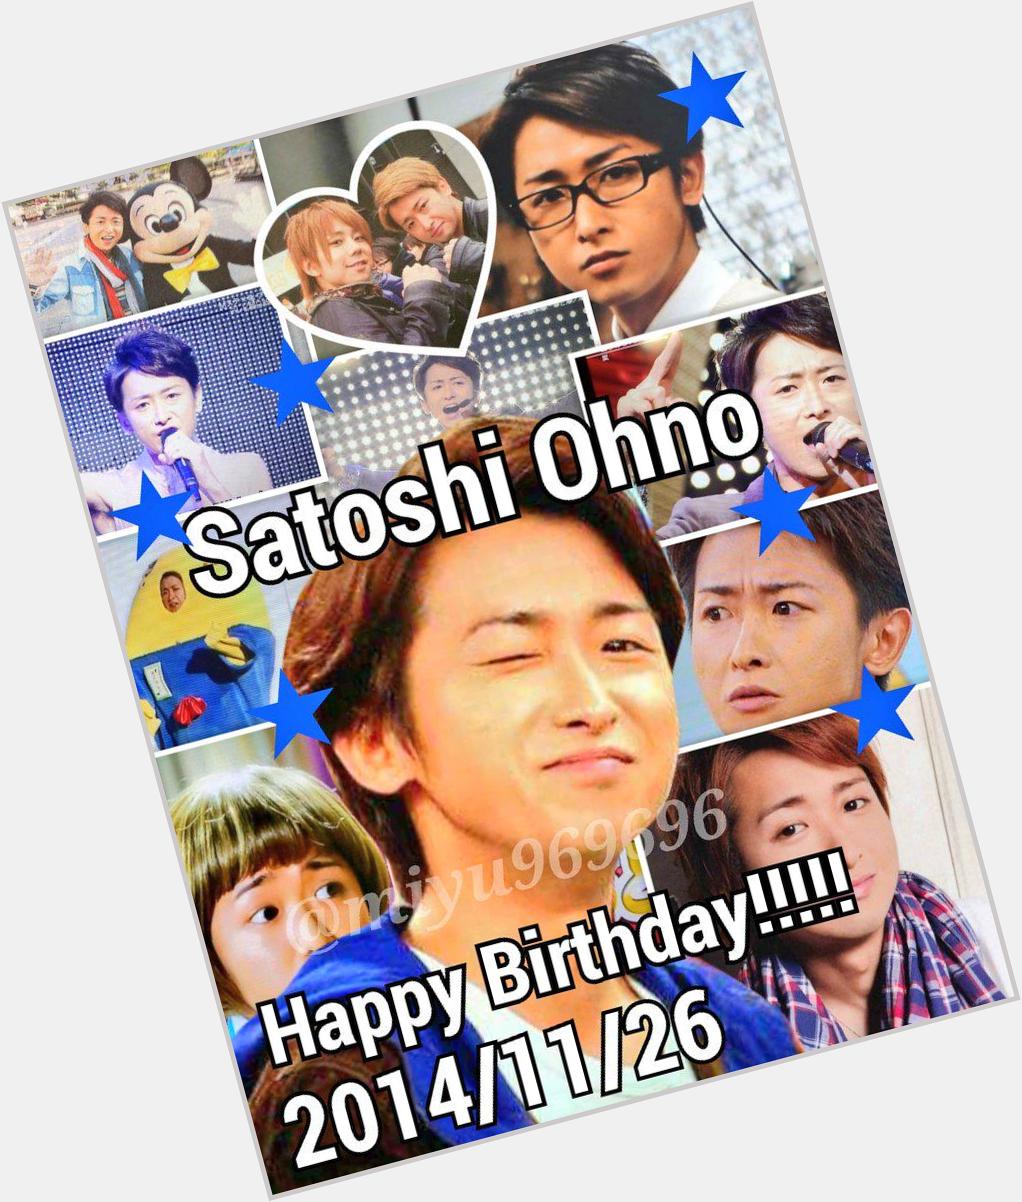  ARASHI Satoshi Ohno      Happy Birthday!!!!!                  !!     dance artistic              2014/11/26 